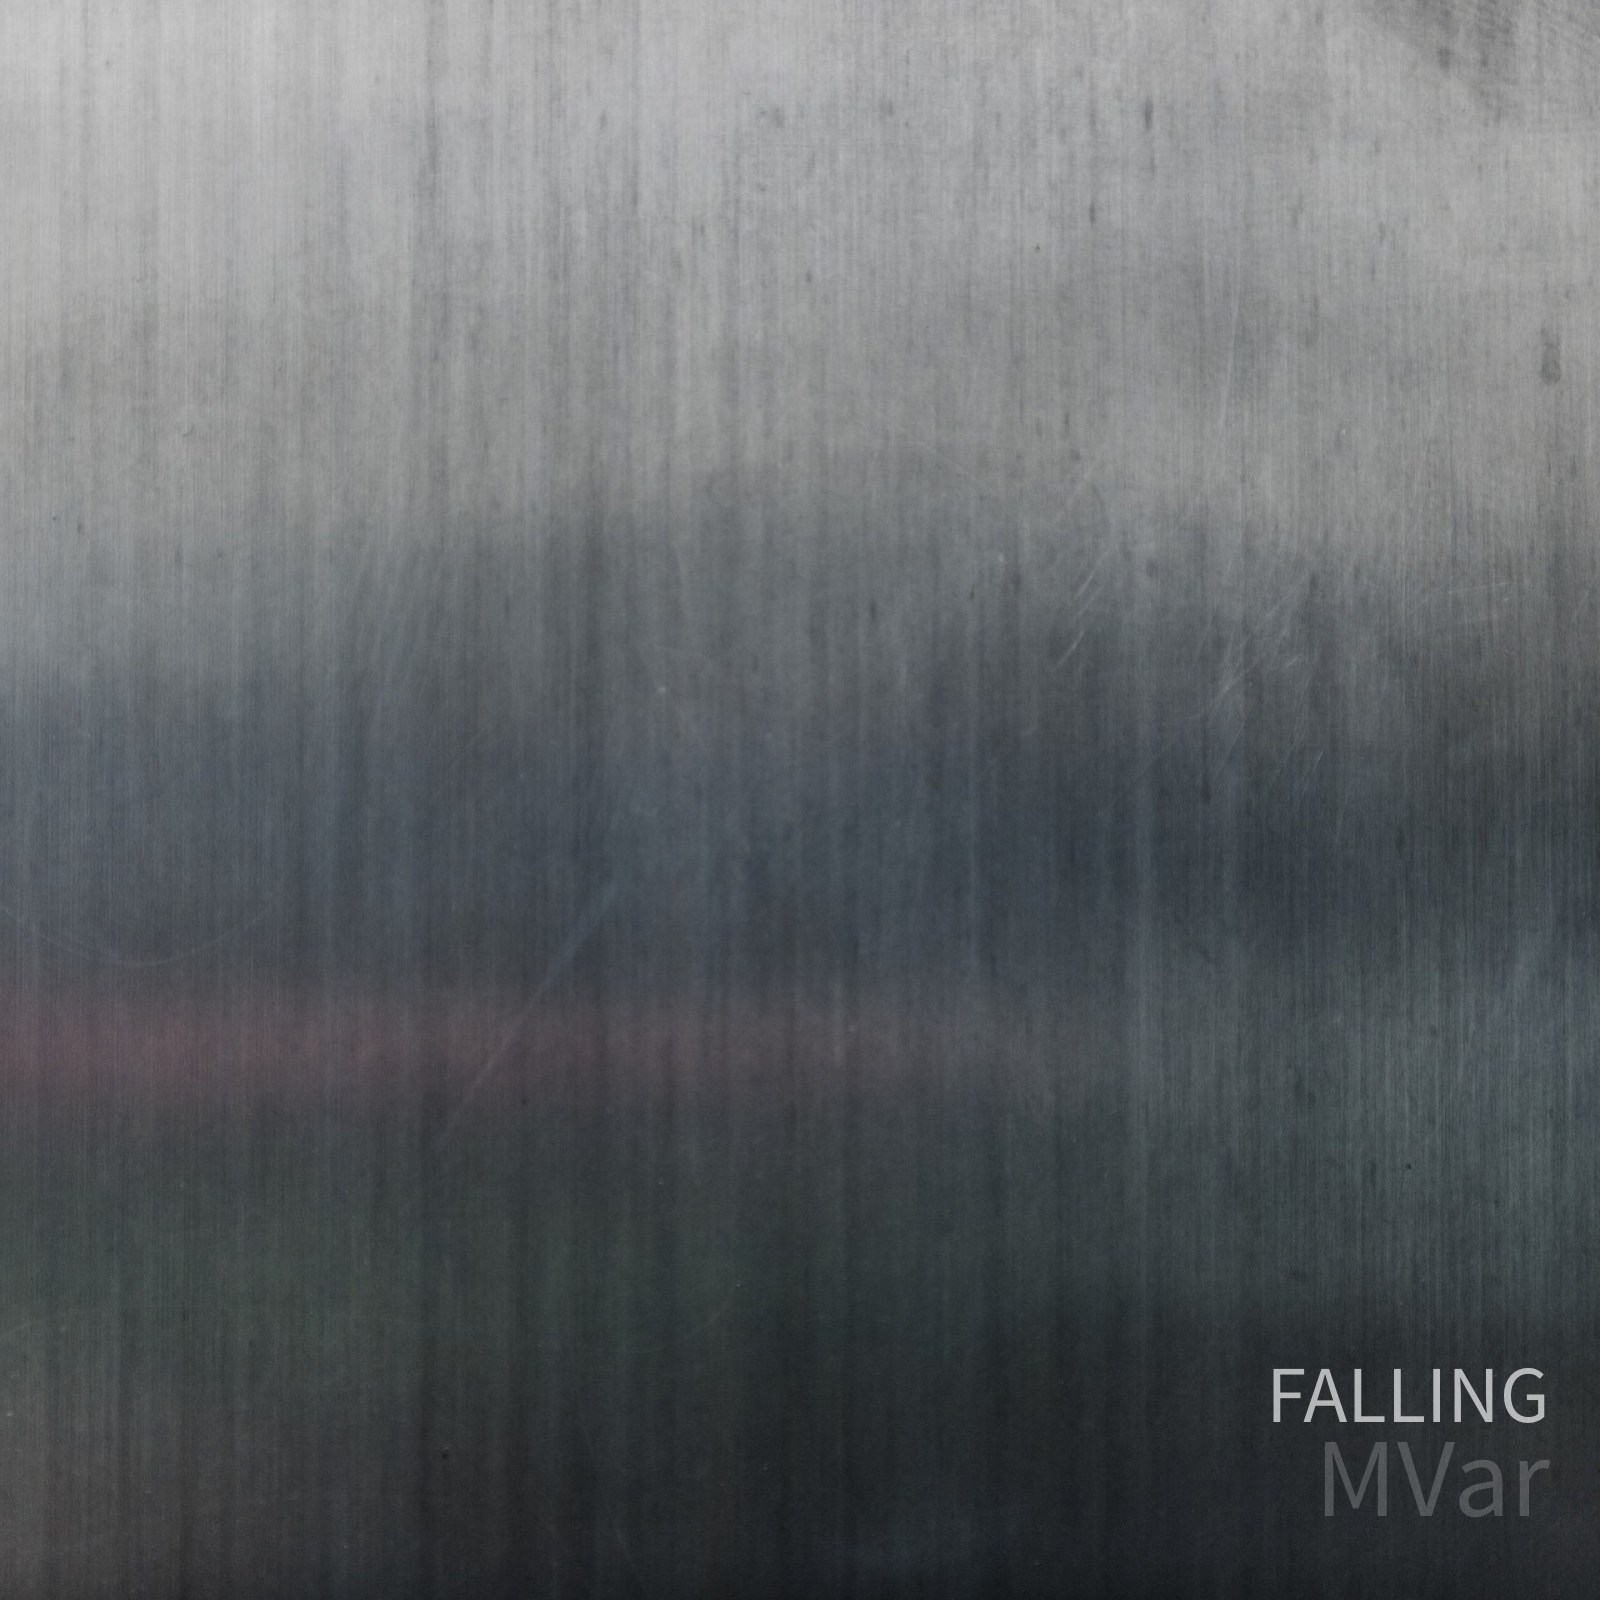 MVar – Falling